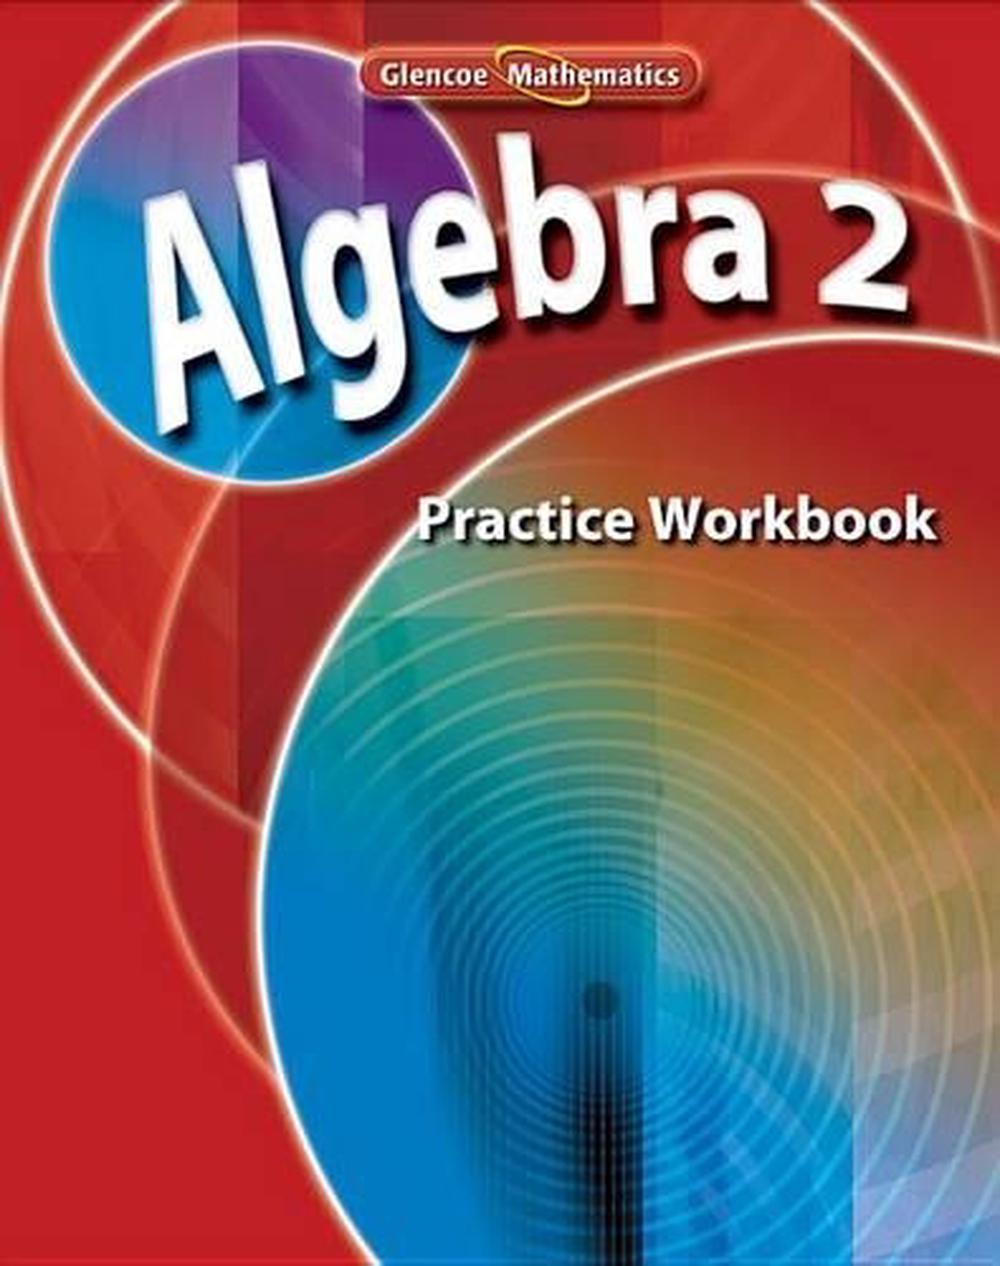 Algebra 2 Practice Workbook By Mcgraw Hill English Paperback Book Free Shippi 9780078790577